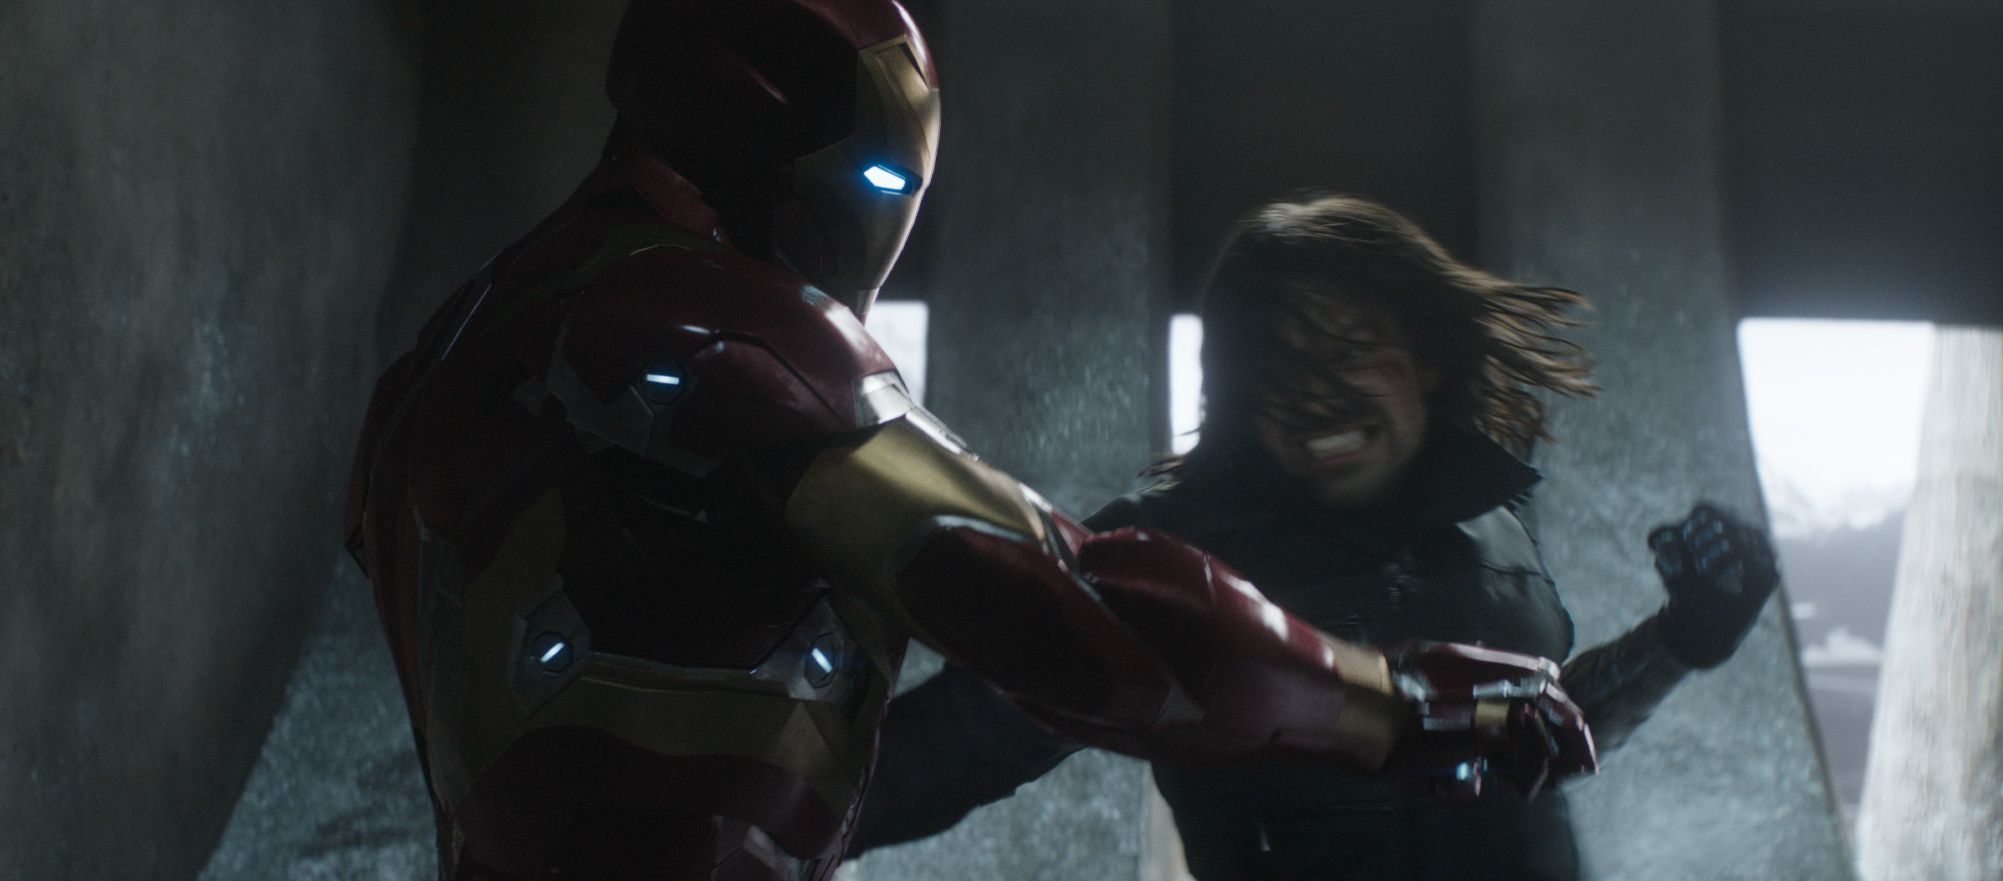 Iron Man vs. The Winter Soldier